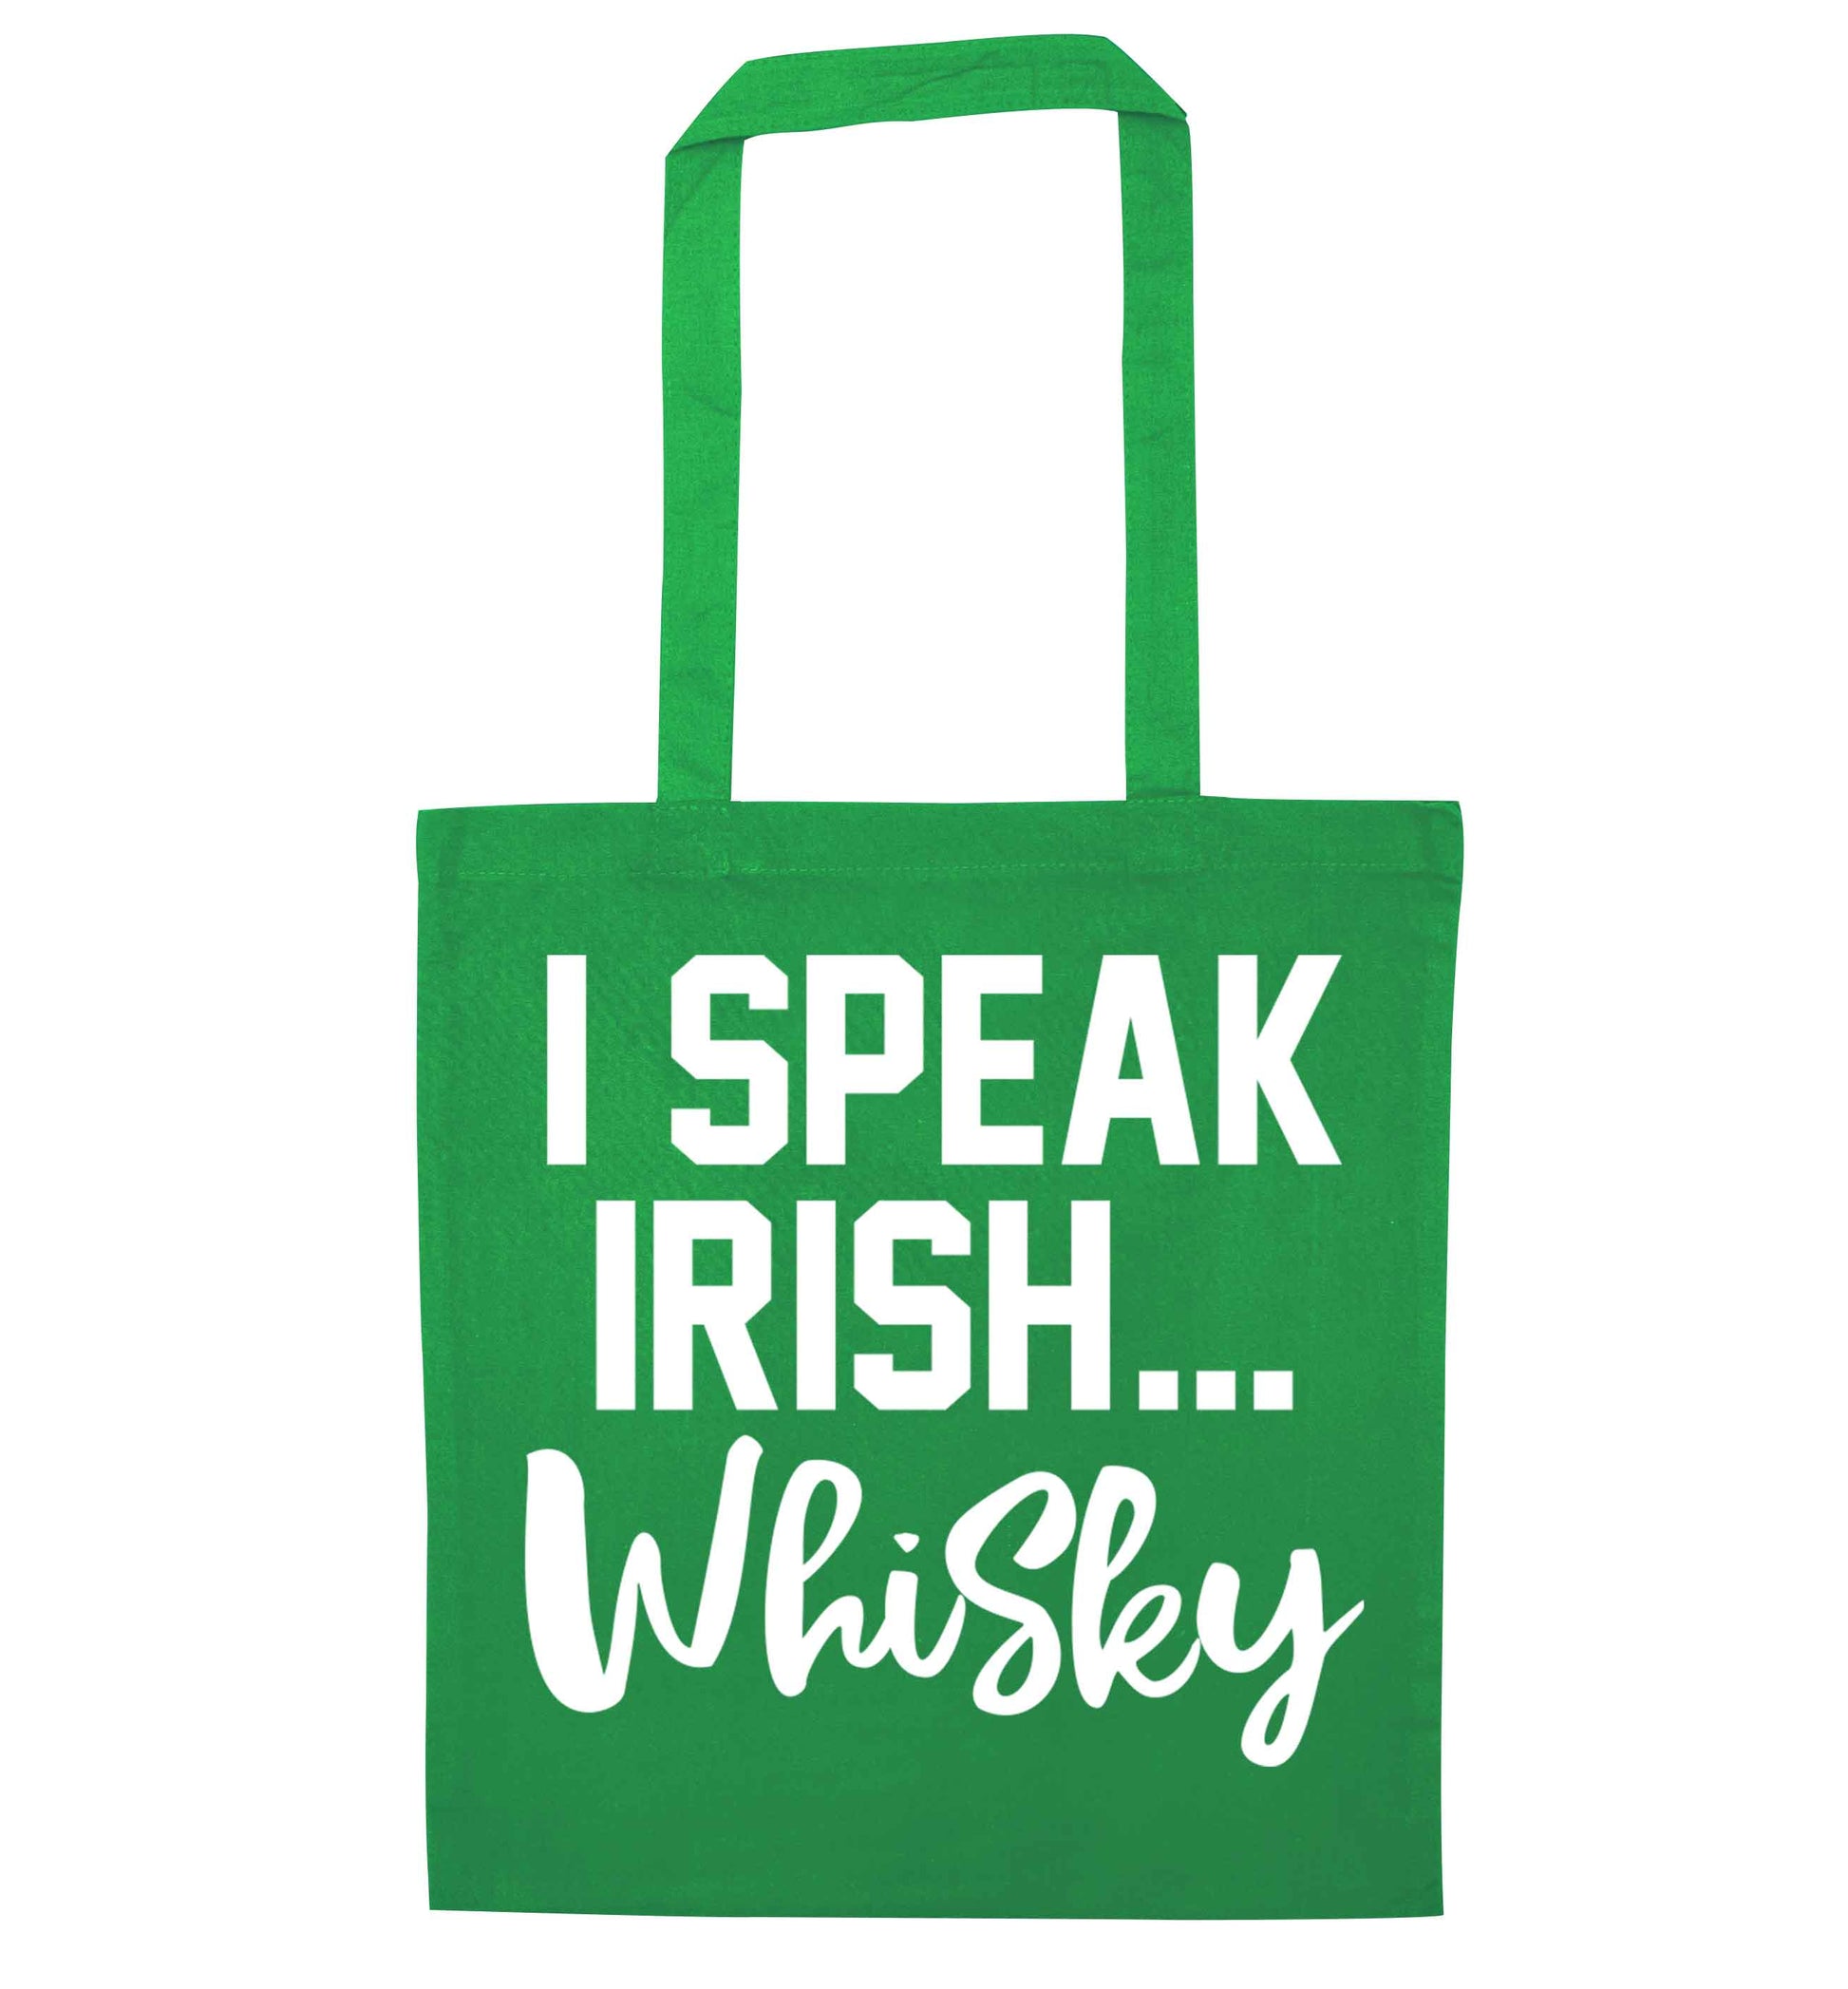 I speak Irish whisky green tote bag